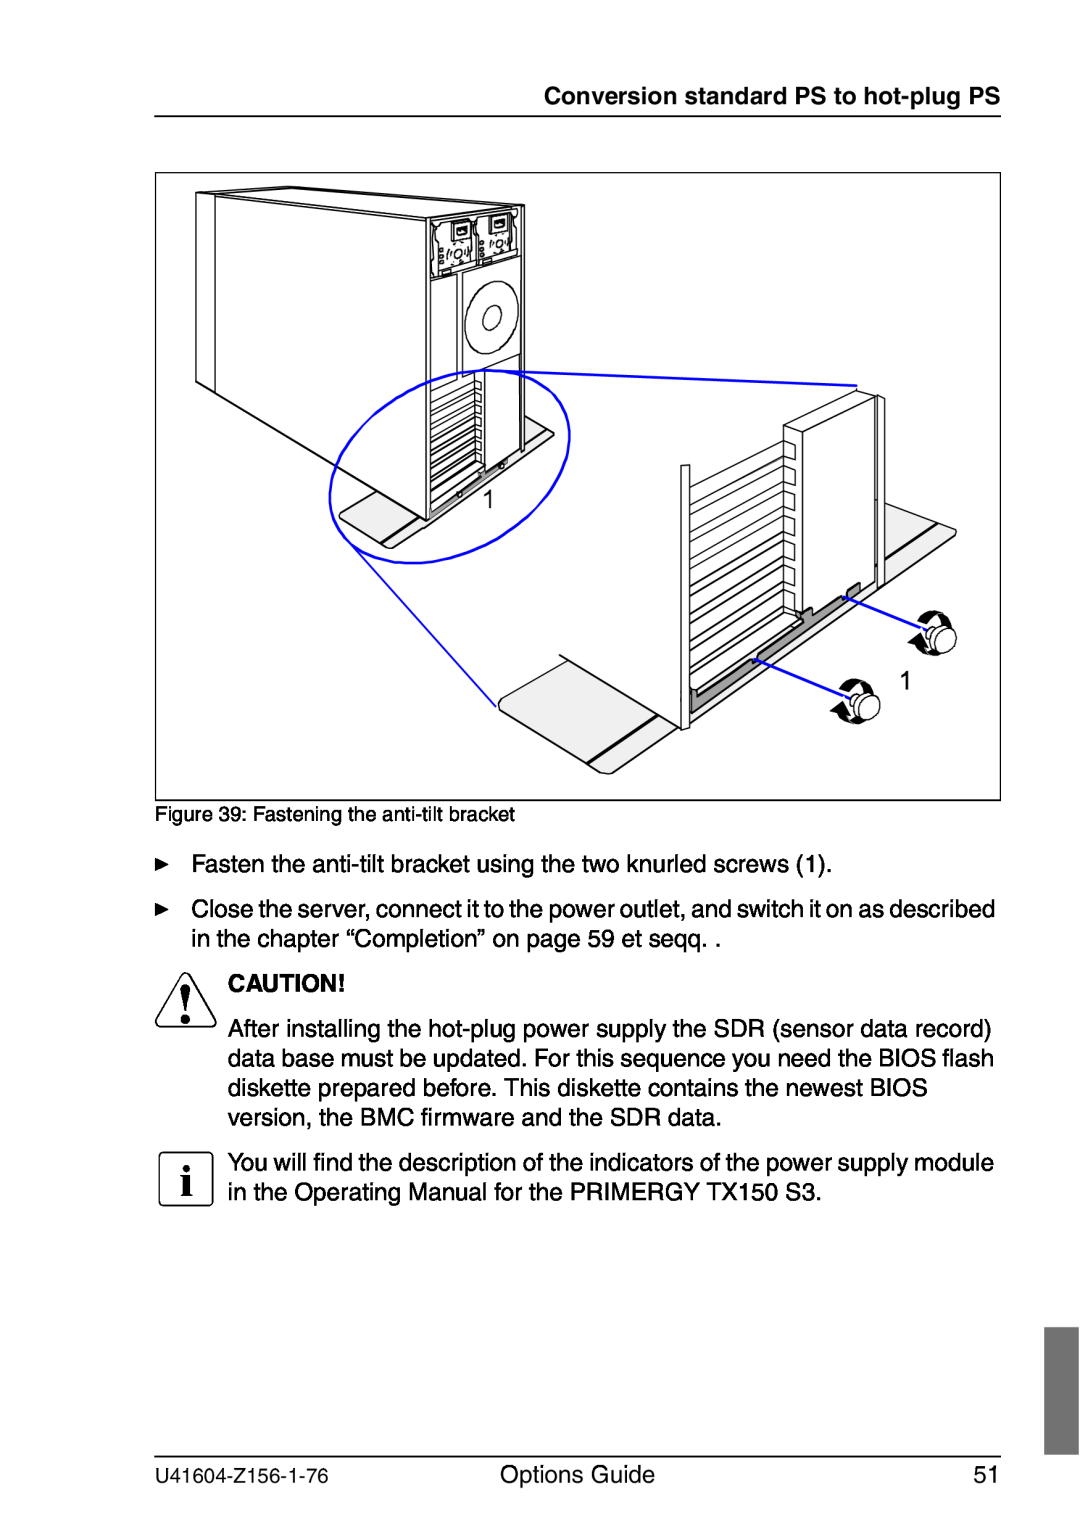 Fujitsu TX150 S3 manual Conversion standard PS to hot-plug PS, V Caution 